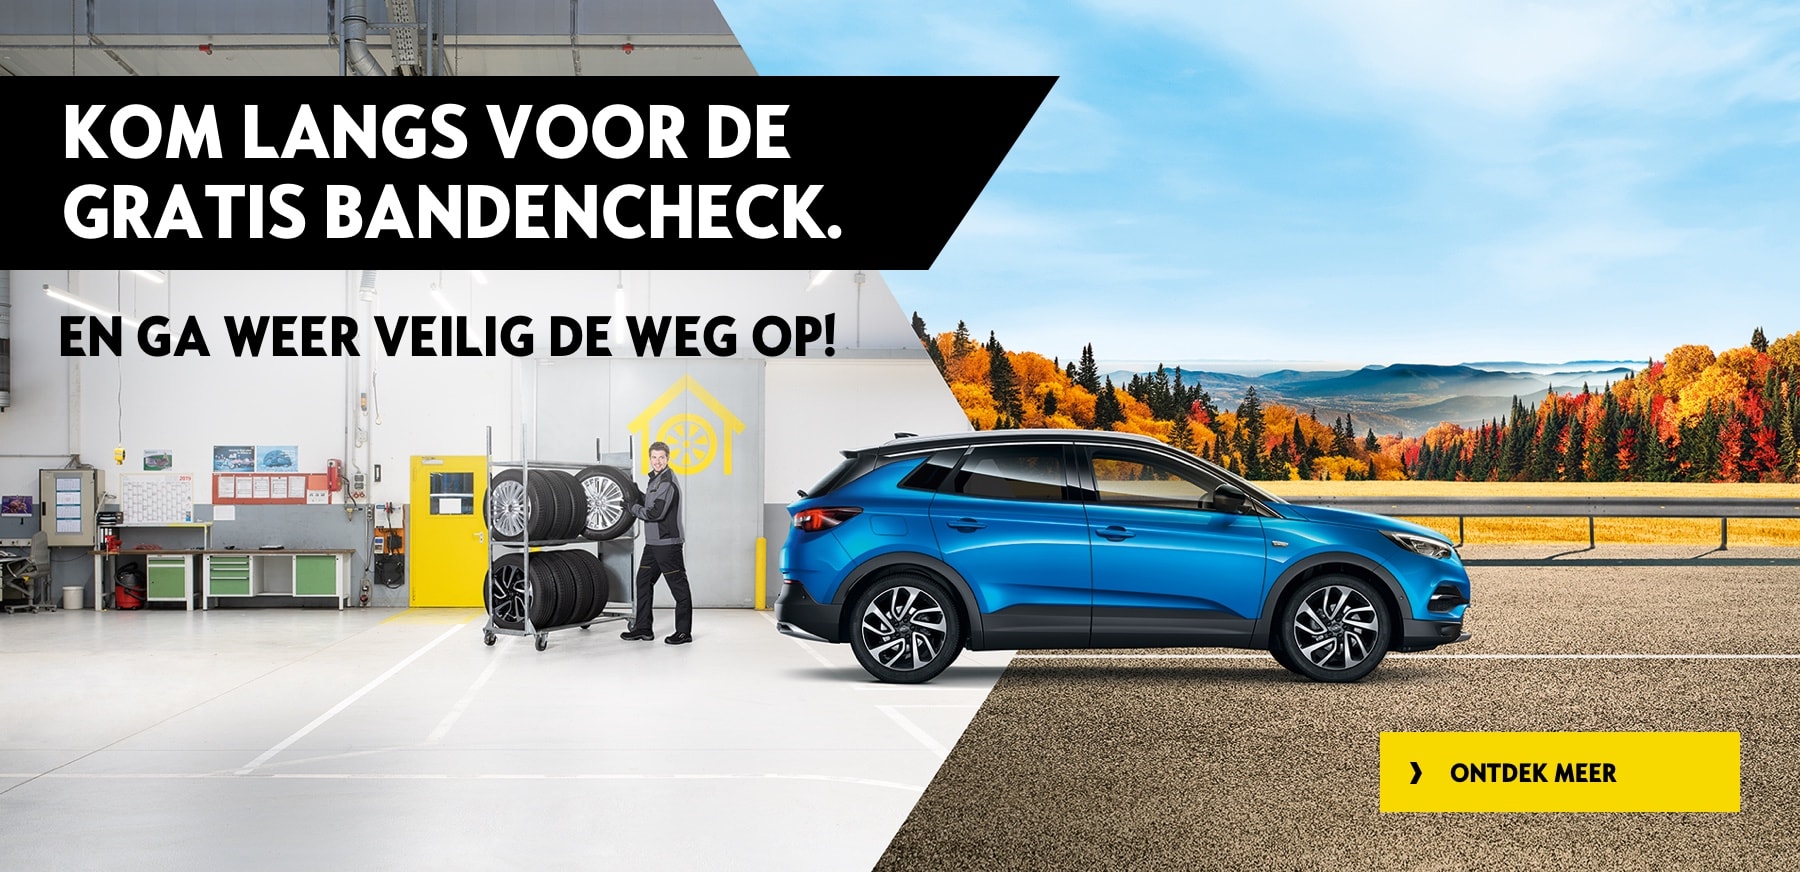 Opel gratis bandencheck